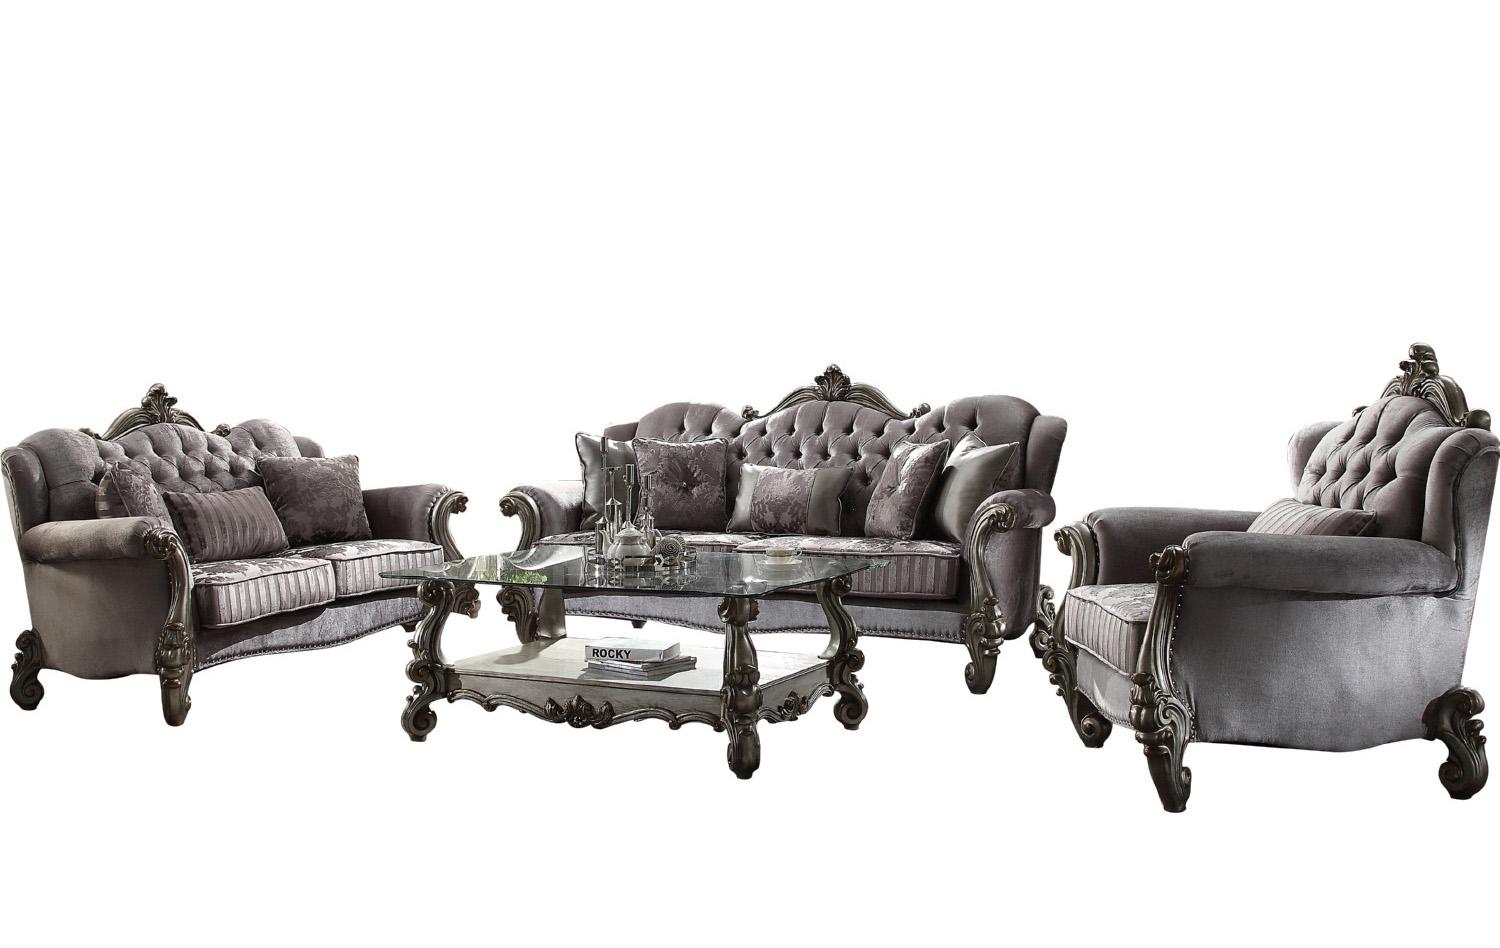 Traditional,  Vintage Sofa Set Versailles 56840 56841 56842 56840-3PC in Platinum, Antique, Silver, Gray Velvet